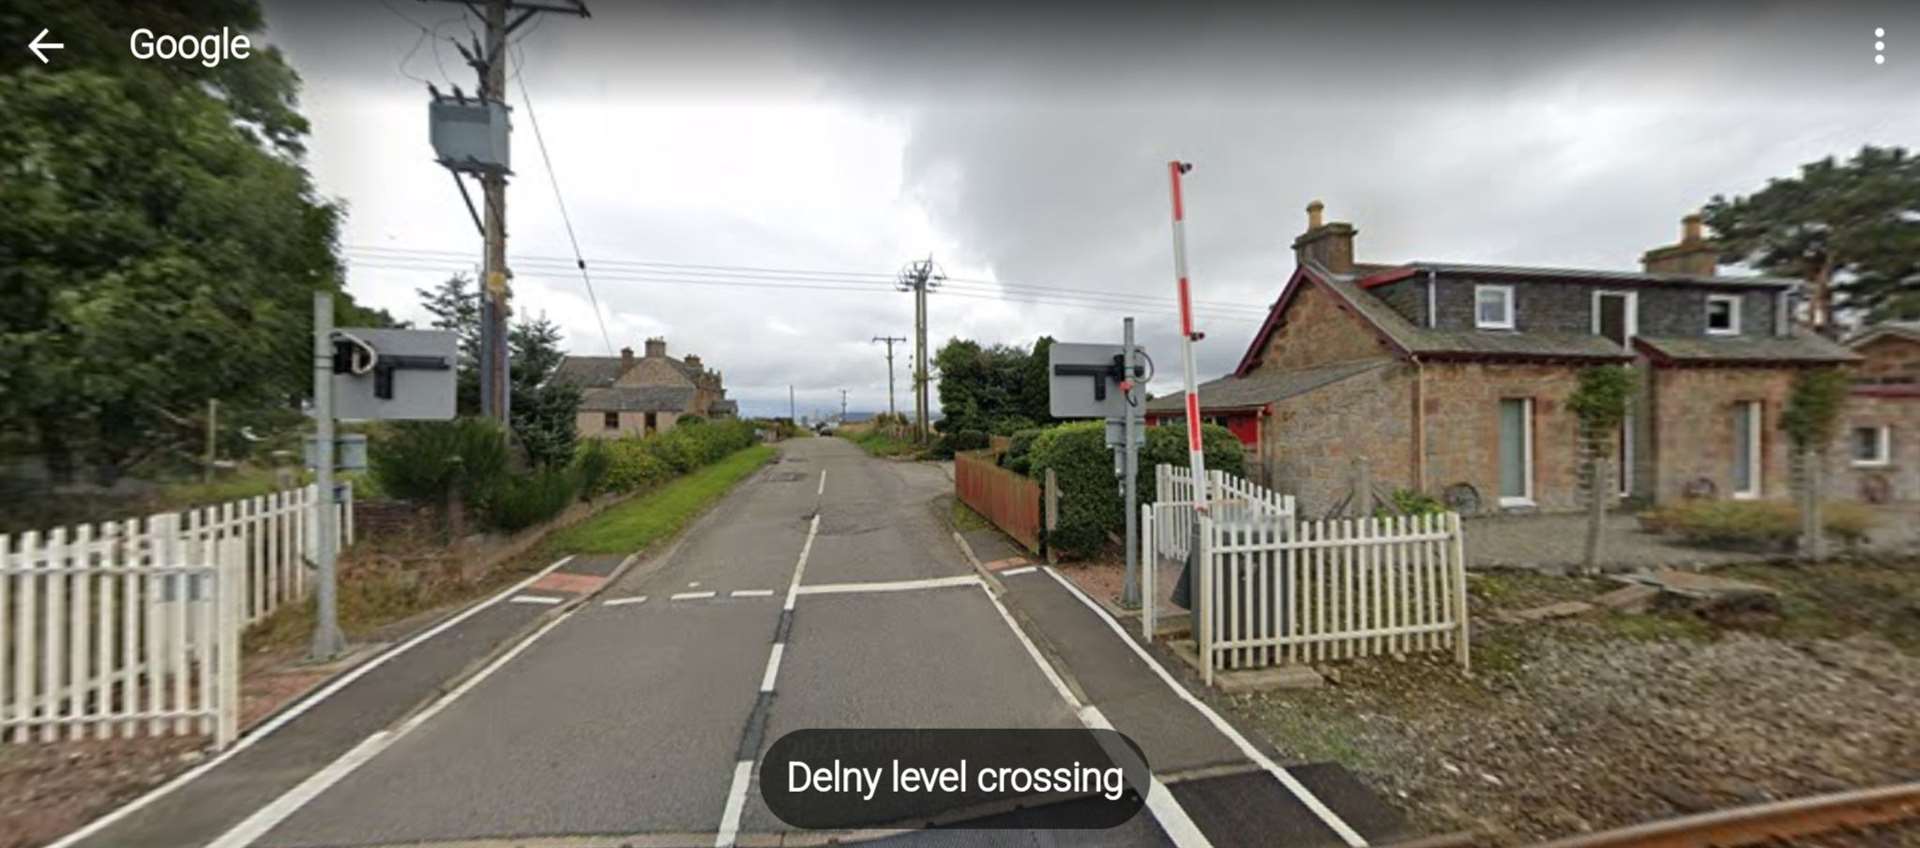 Delny level crossing